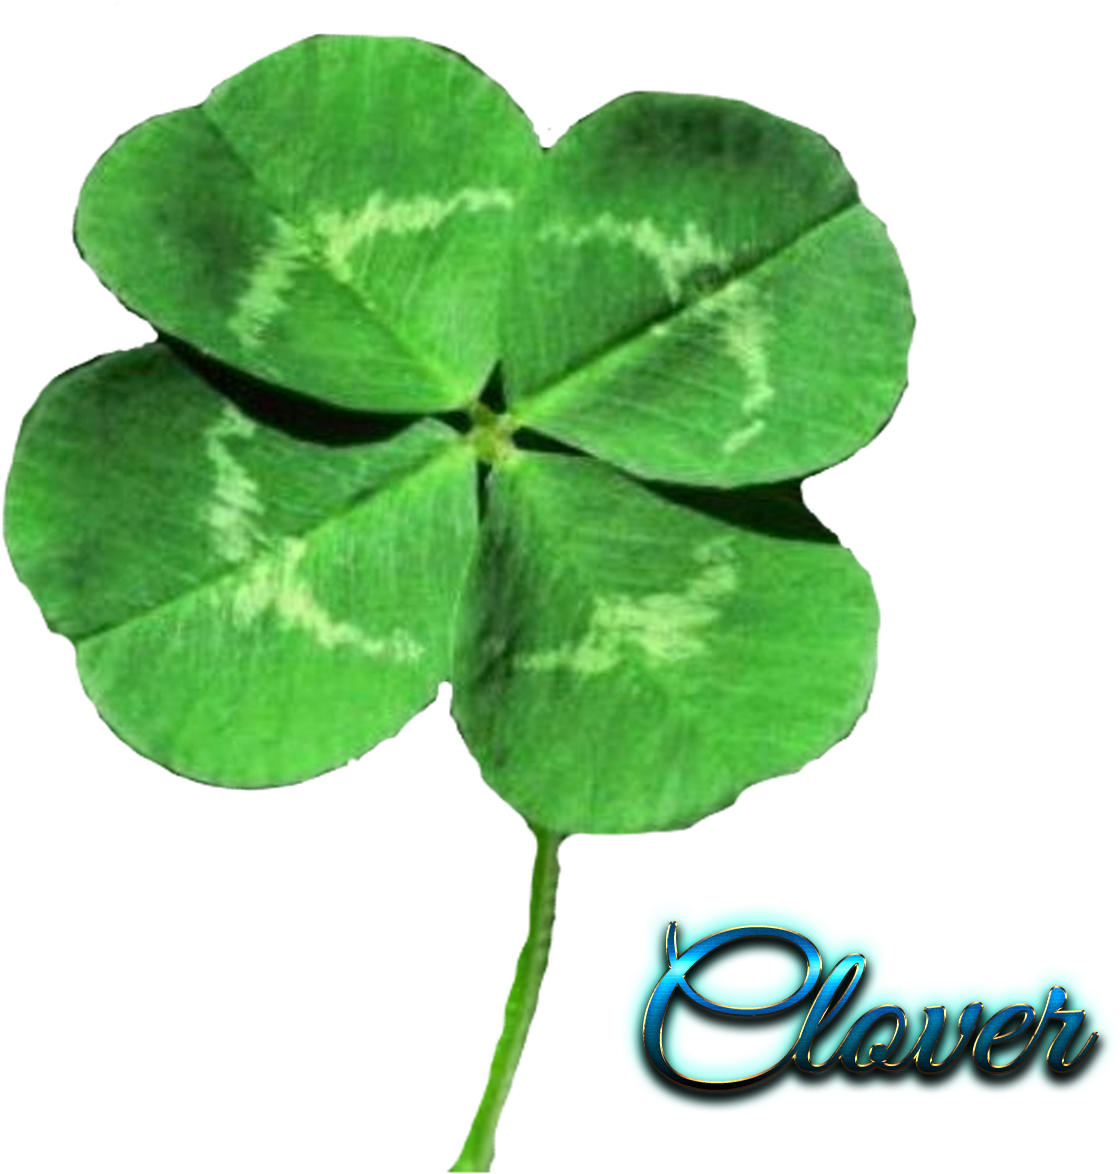 Four Leaf Clovers Transparent Clipart - Large Size Png Image - PikPng